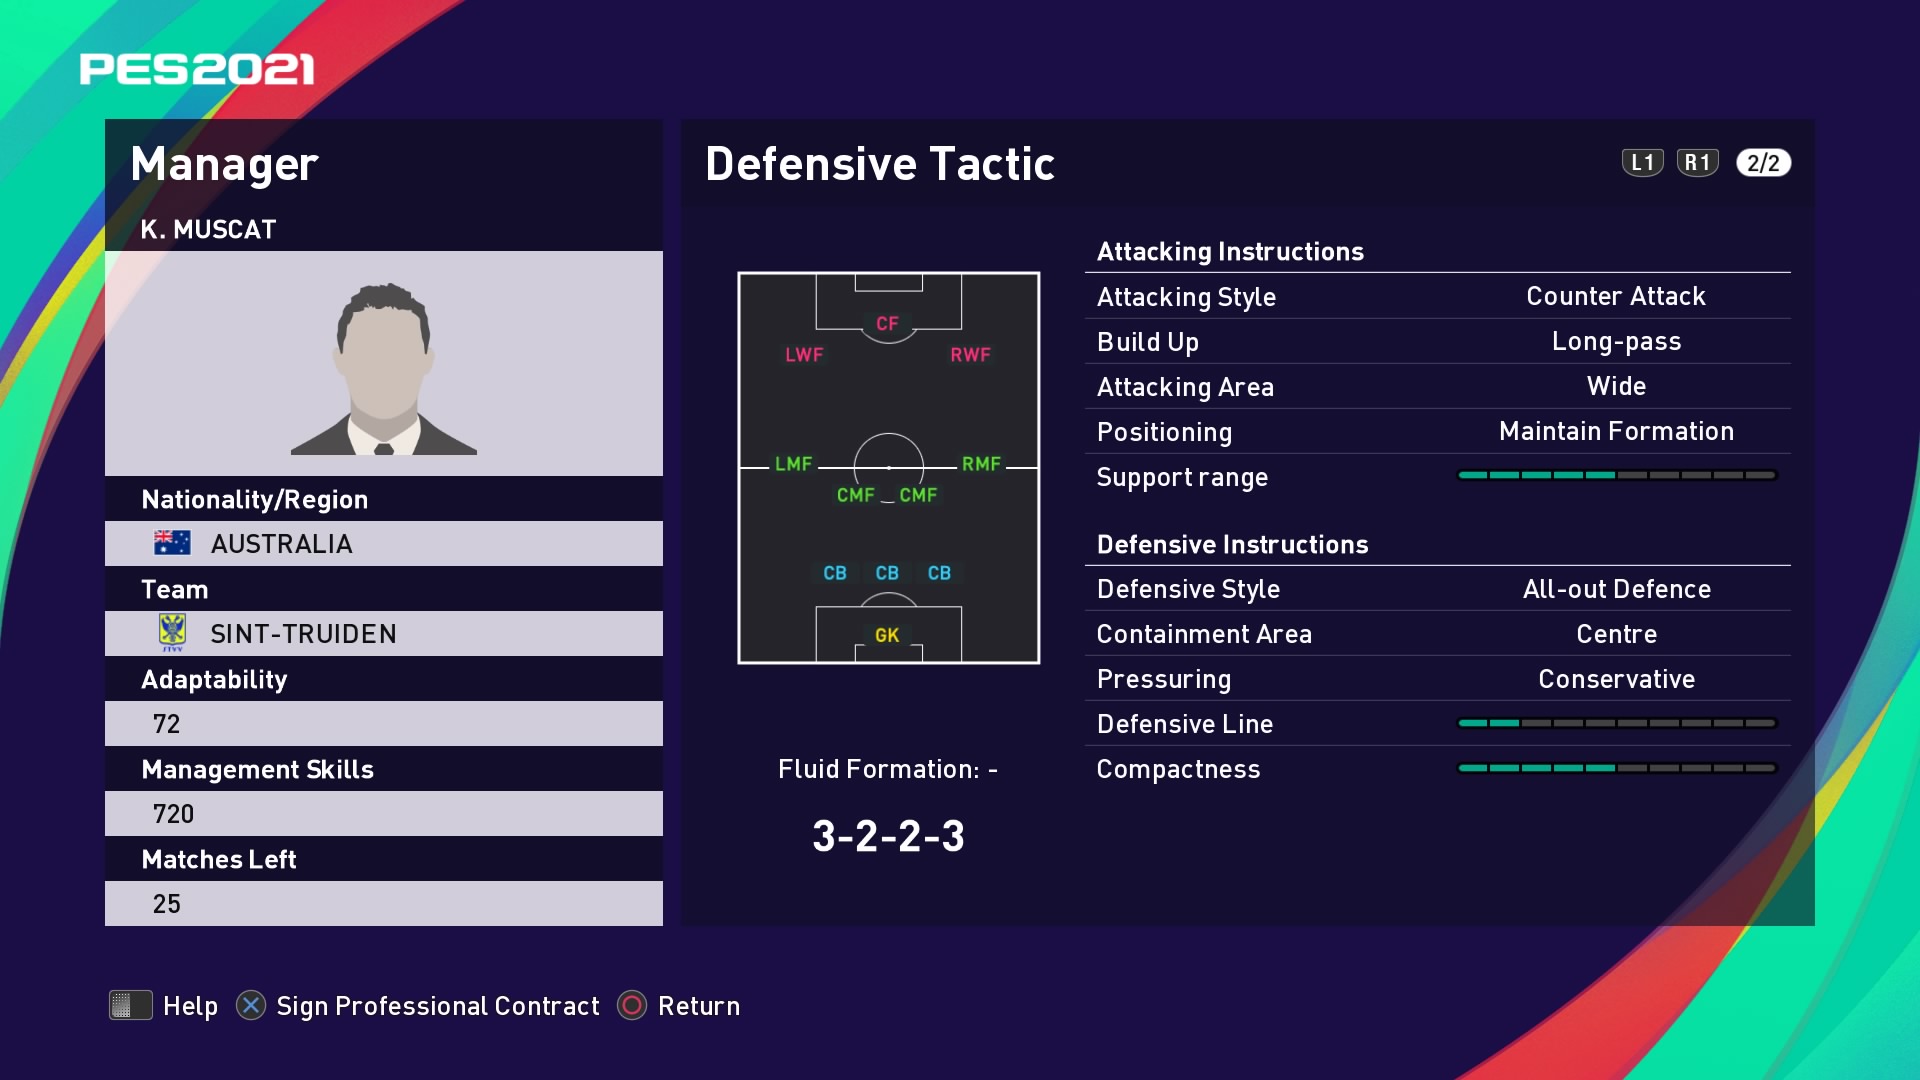 K. Muscat (2) (Kevin Muscat) Defensive Tactic in PES 2021 myClub